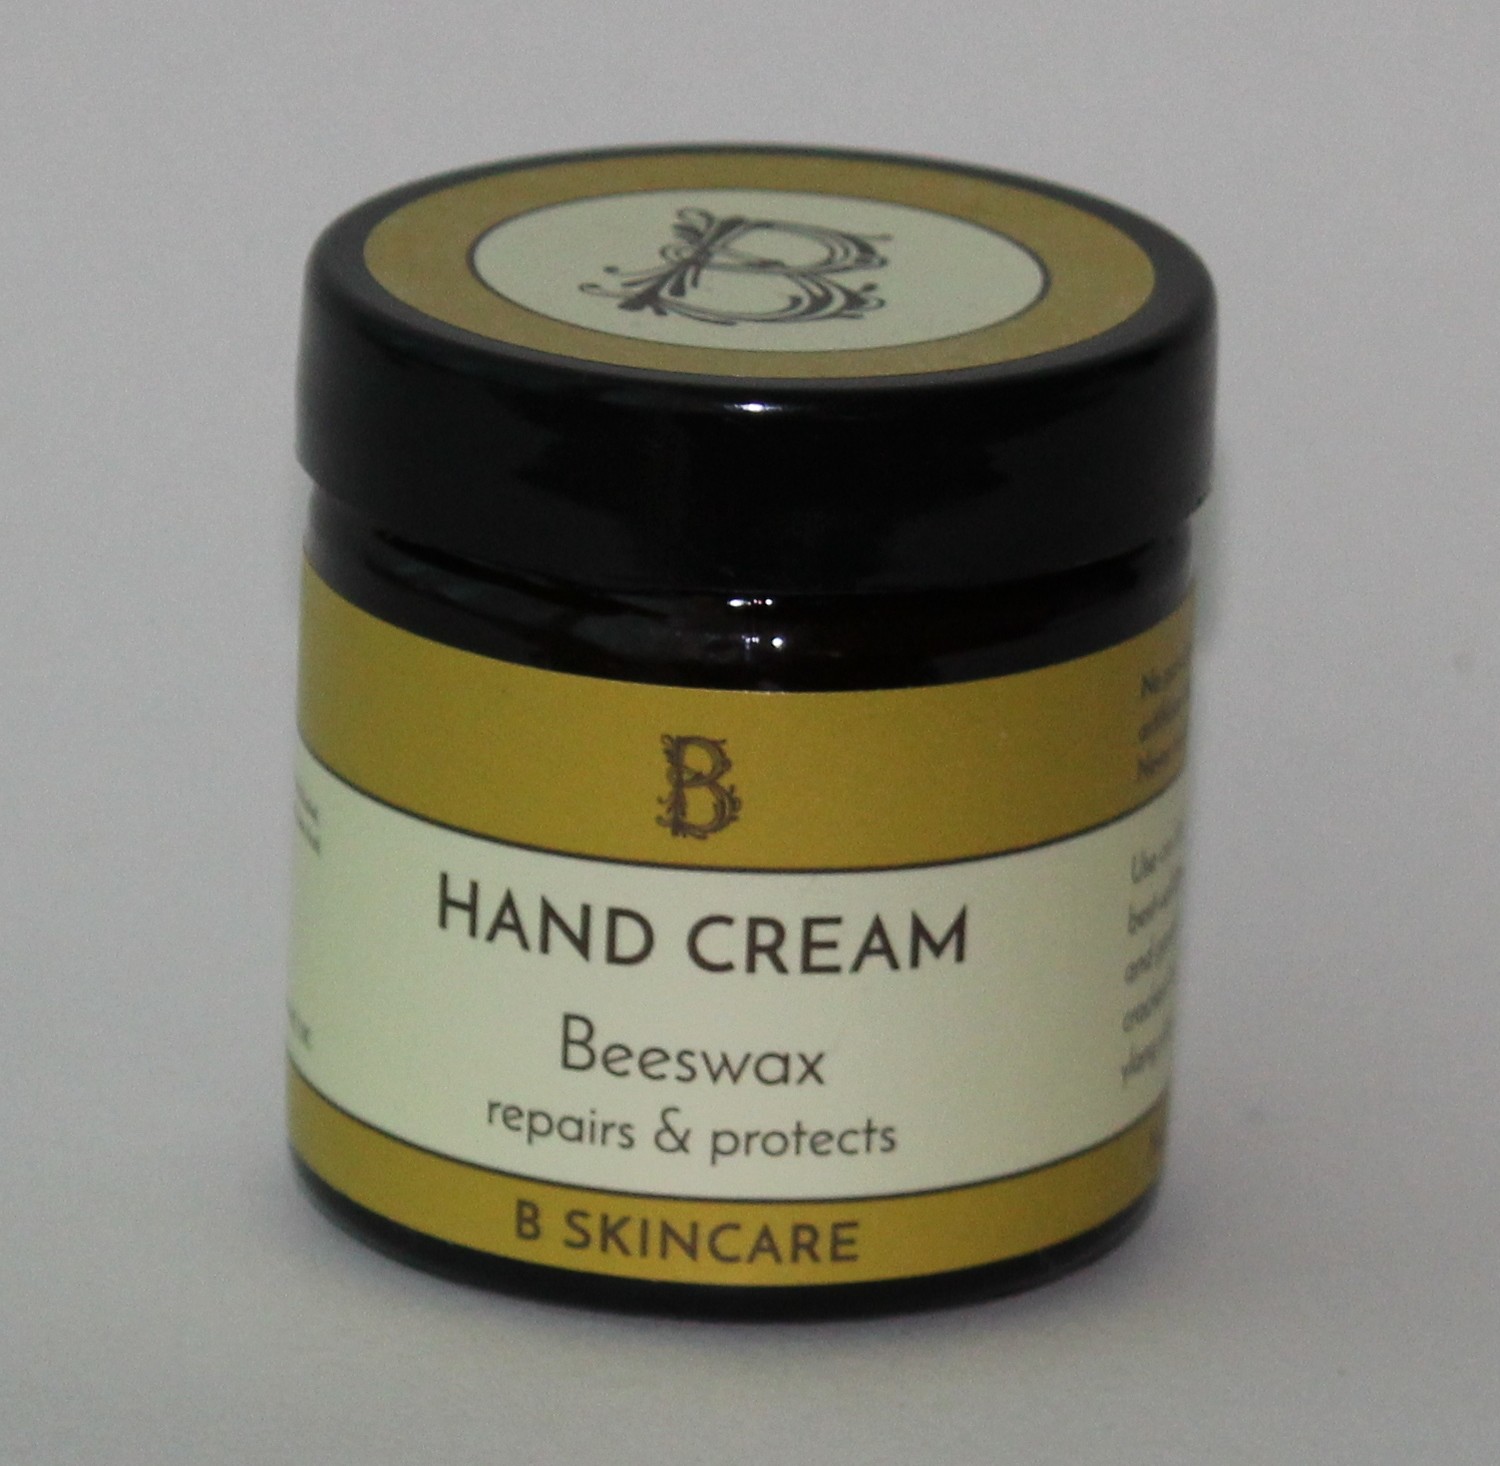 B Skincare Beeswax hand and foot cream